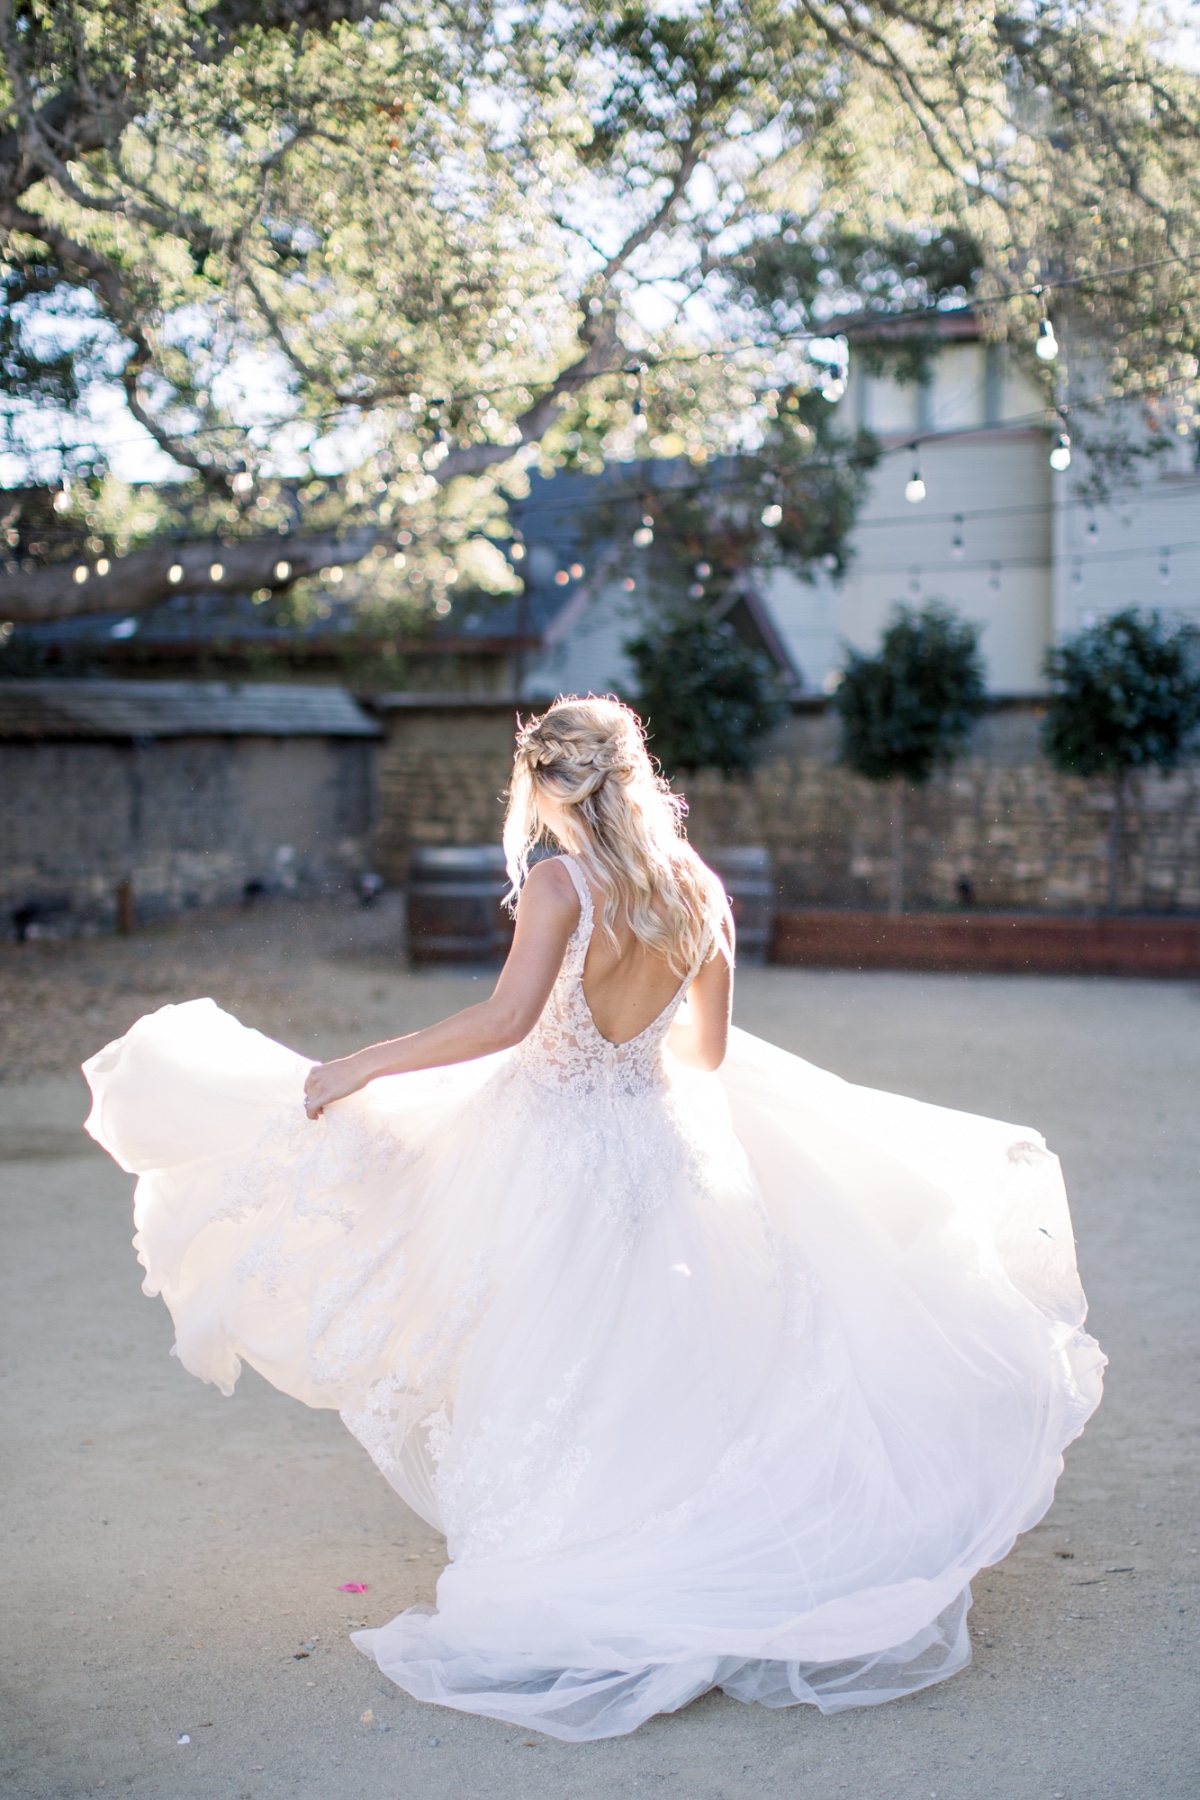 Twirl the wedding dress